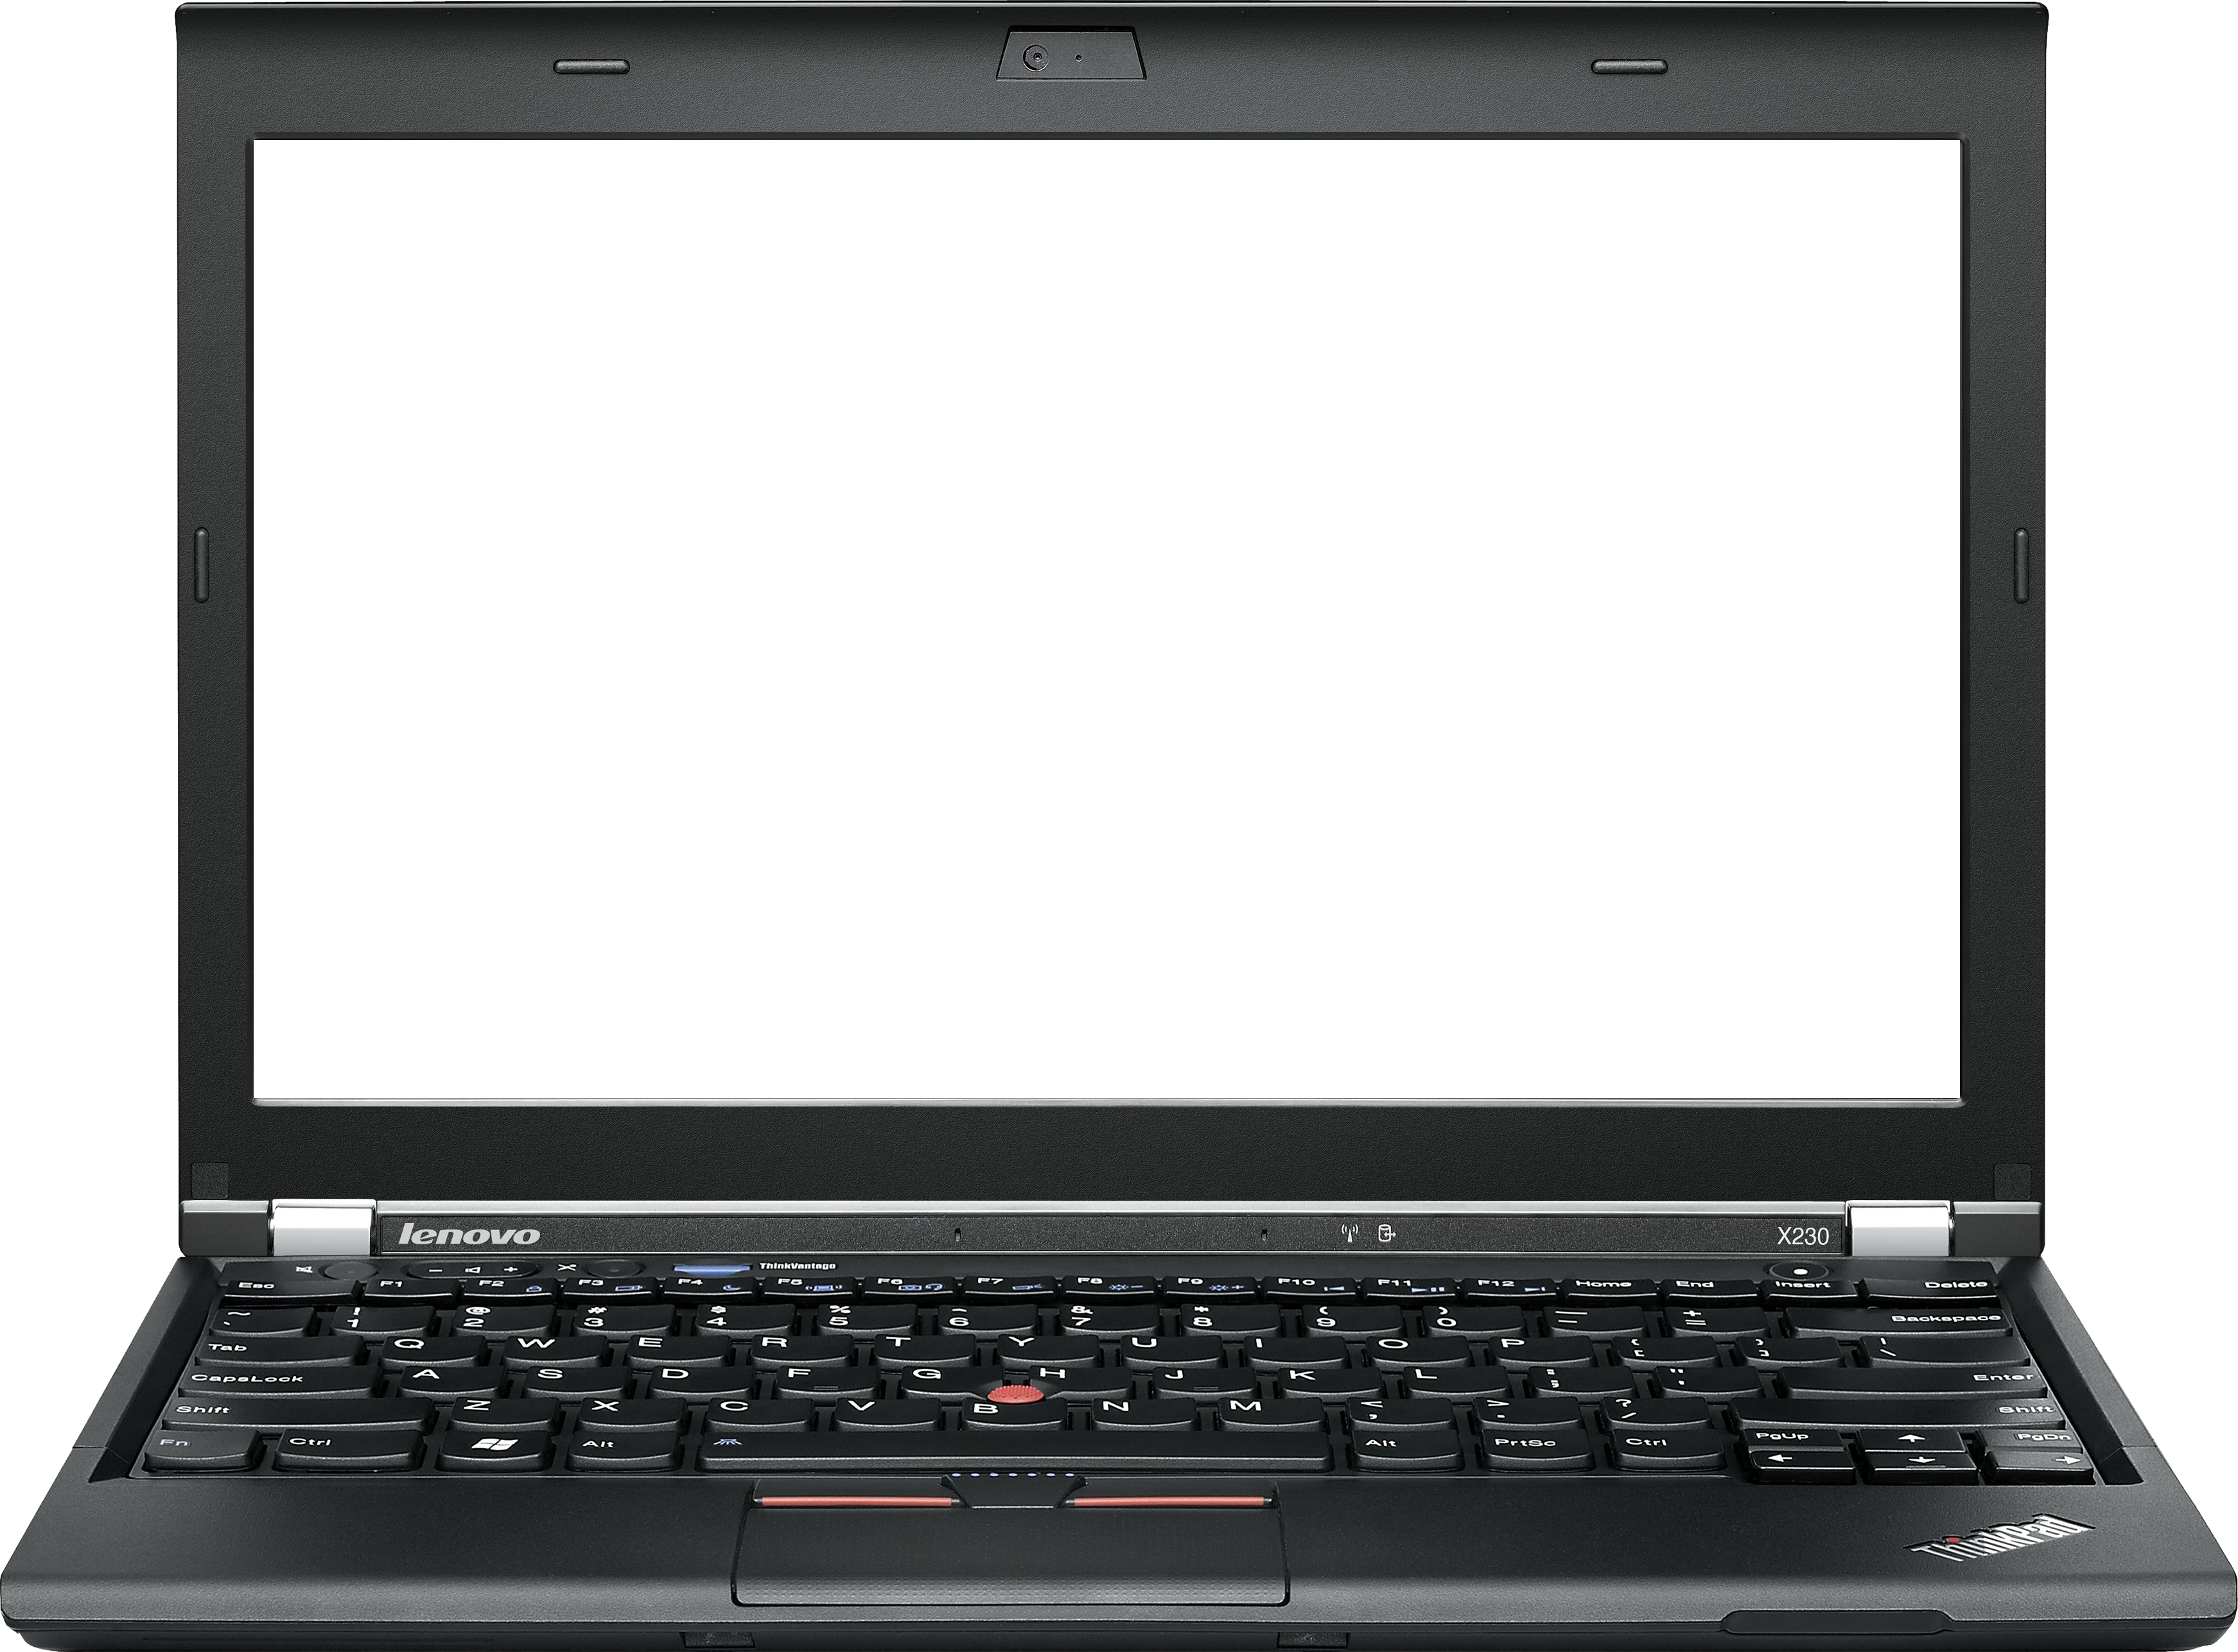 Ноутбук картинка. Ноутбук Lenovo THINKPAD x31. Ноутбук леново на белом фоне. Леново Синкпад монитор. Ноутбук без фона.